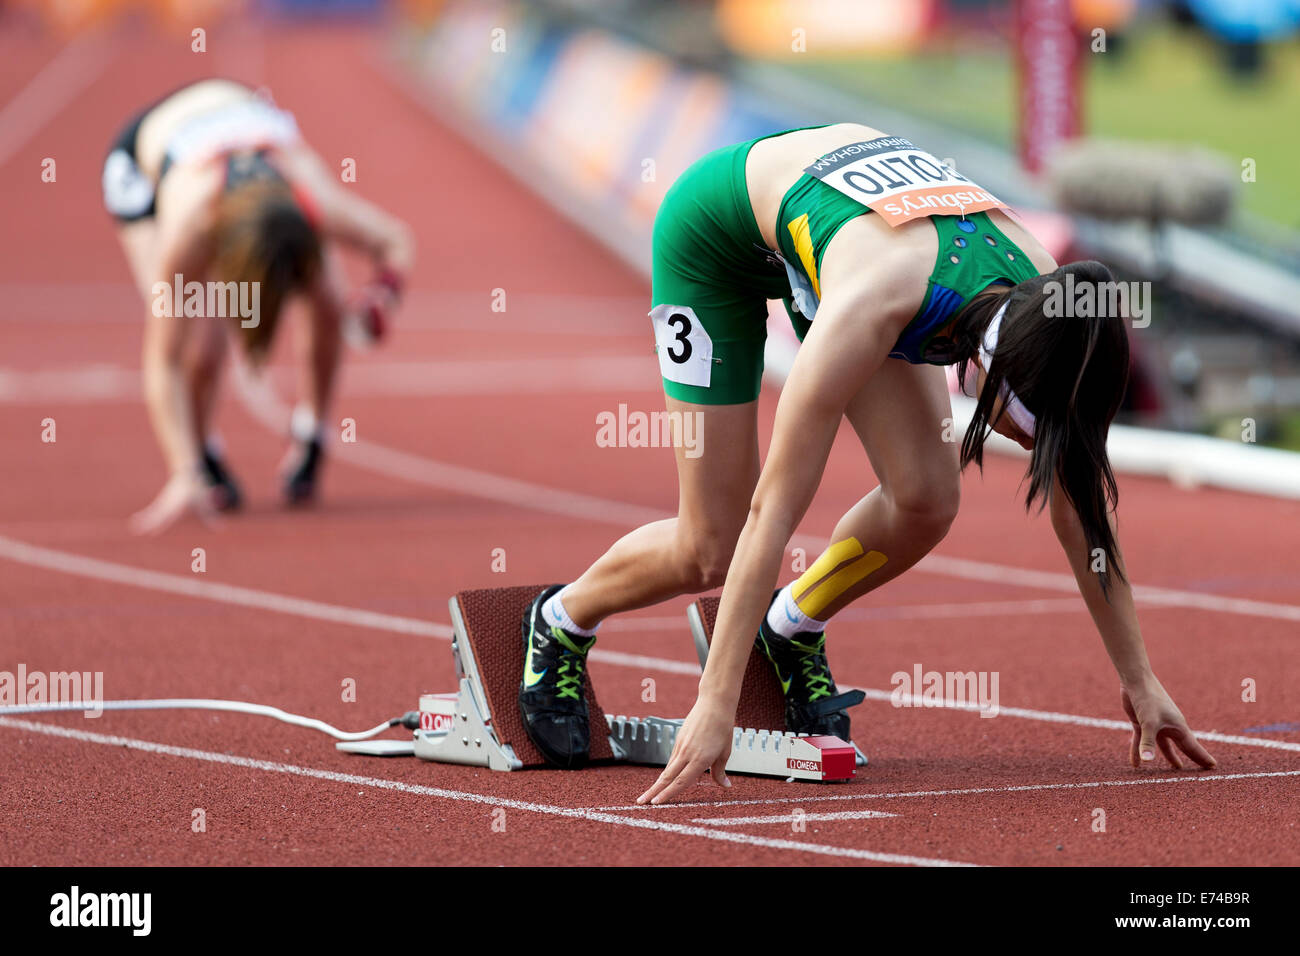 Frauen 400m T37-38, 2014 IPC Sainsbury-Birmingham-Grand-Prix, Alexander Stadium, Veronica HIPOLITO, UK Stockfoto